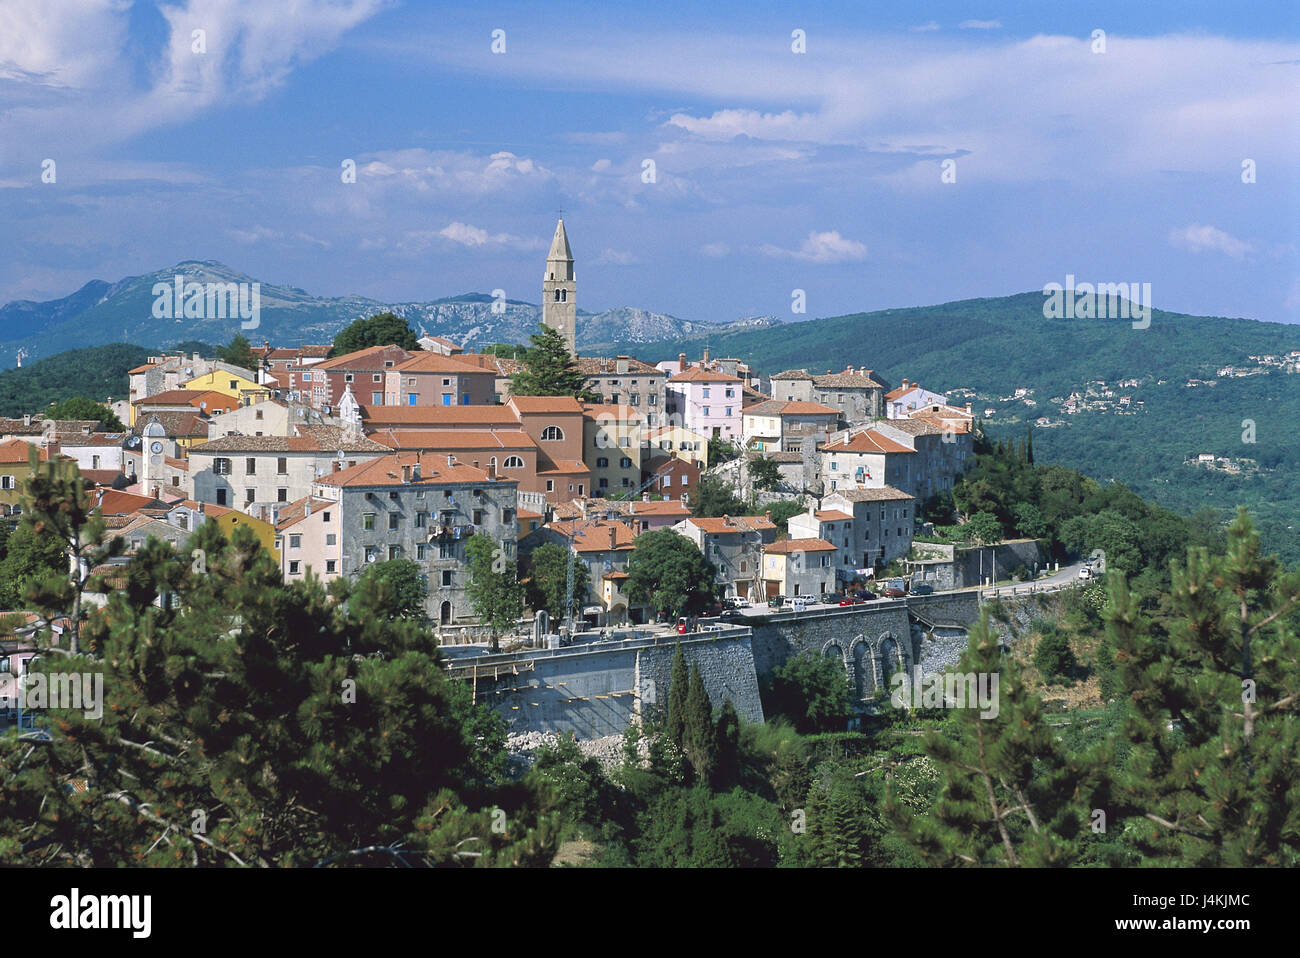 Republika hrvatska hi-res stock photography and images - Alamy